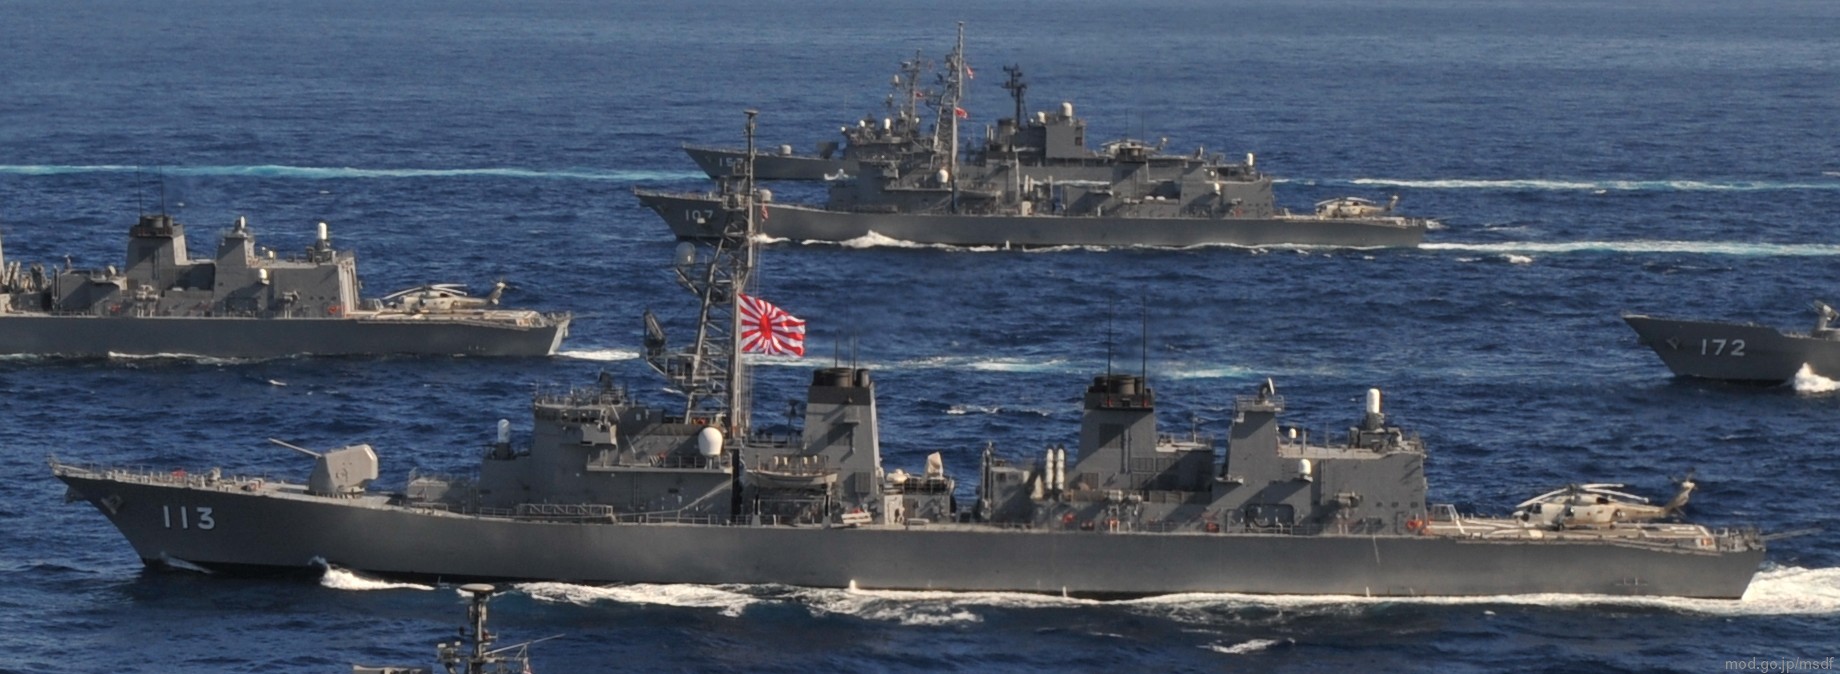 dd-113 js sazanami takanami class destroyer japan maritime self defense force jmsdf 02